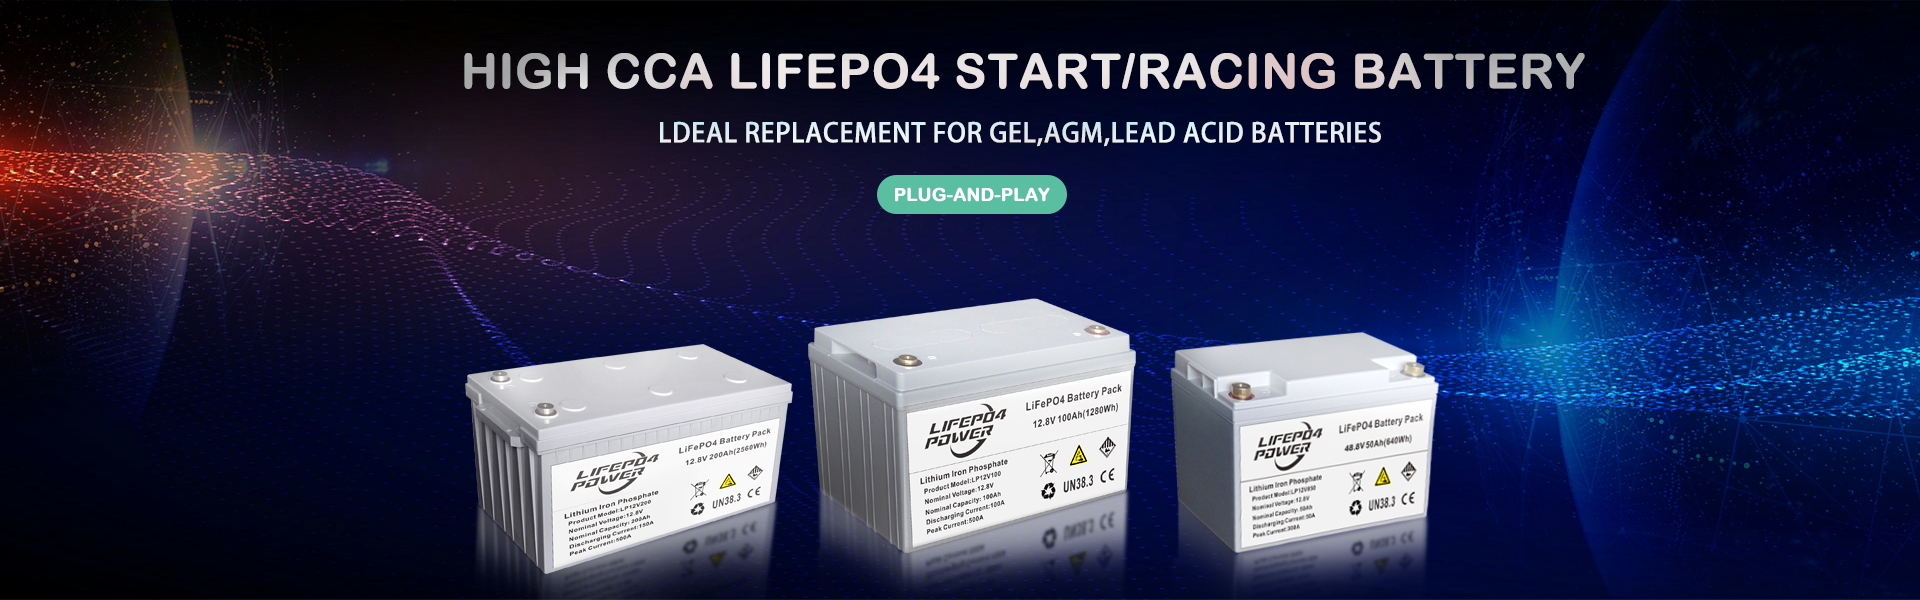 Alta batería CCF LiFePO4 Start / Racing Plug-And-Play. Reemplazo ideal para baterías GEL, AGM, chumbo ácido